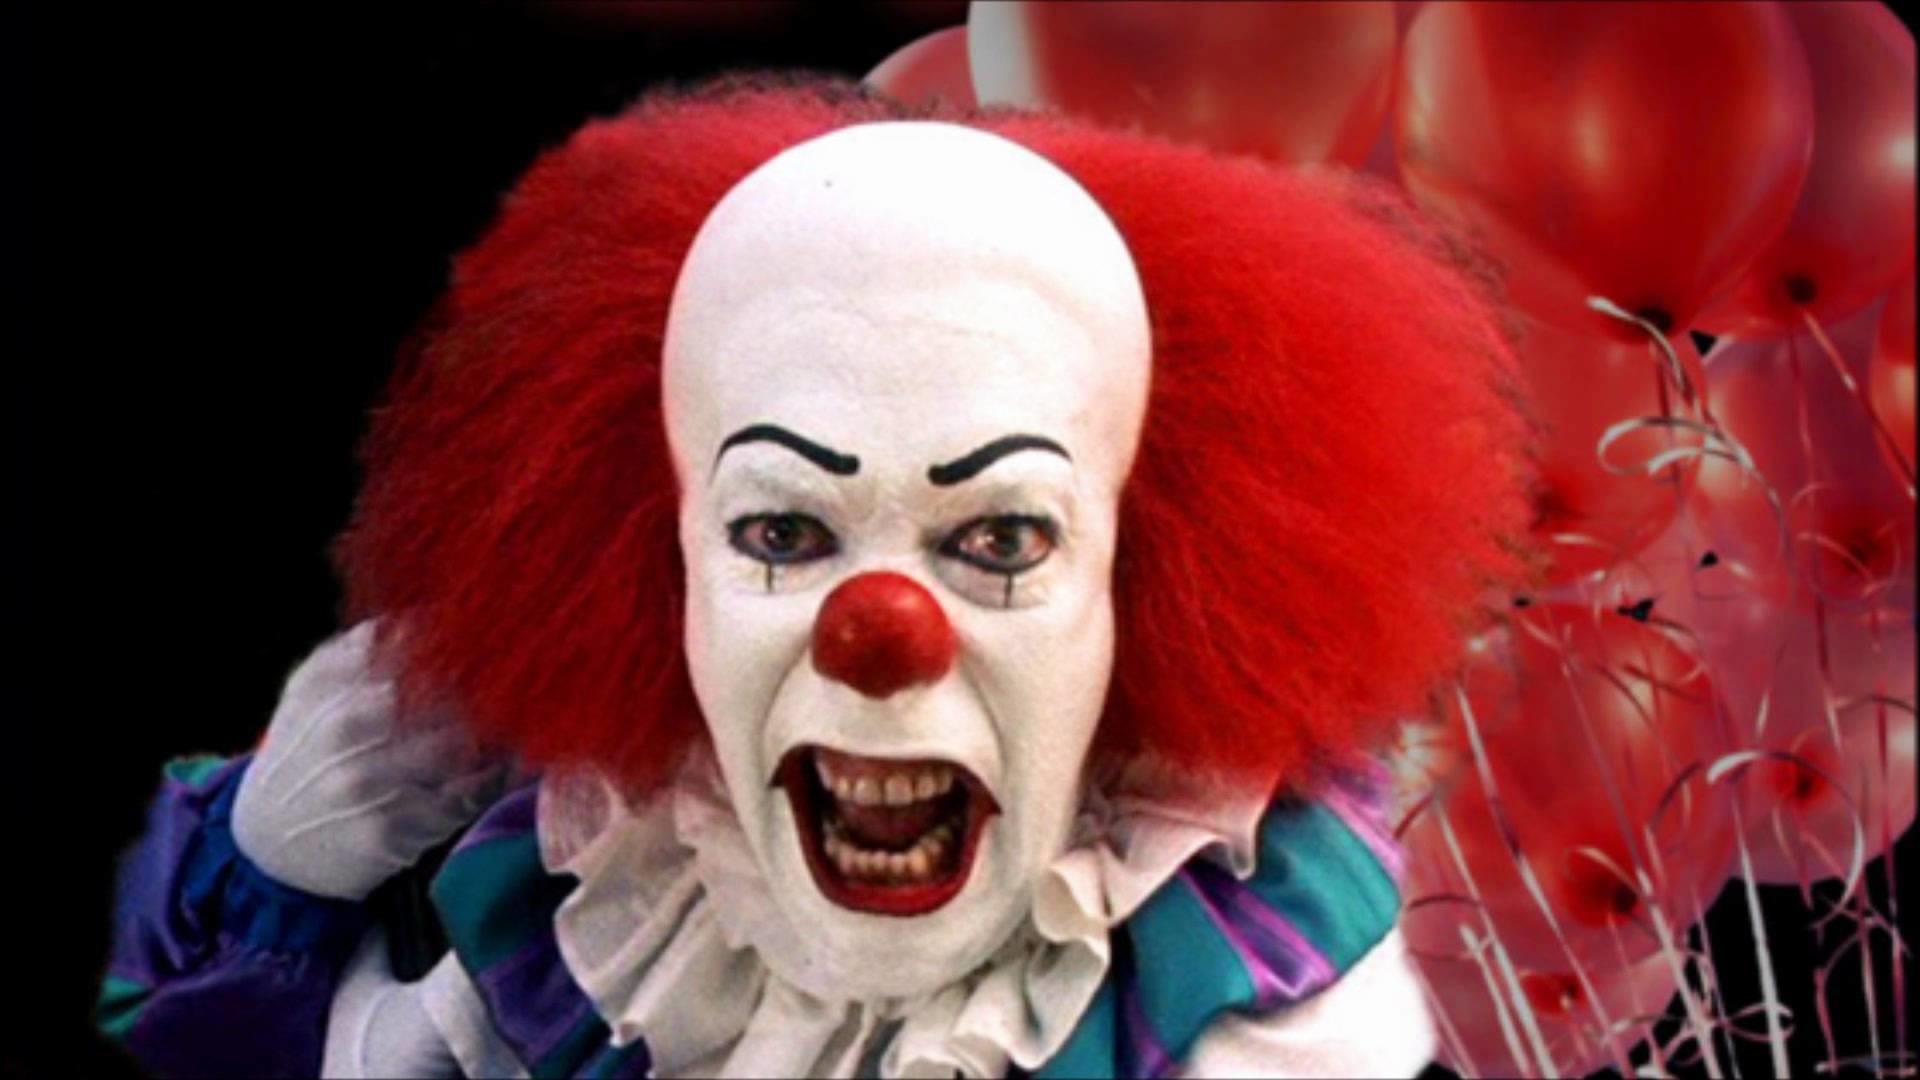 1920x1080 scary clown face